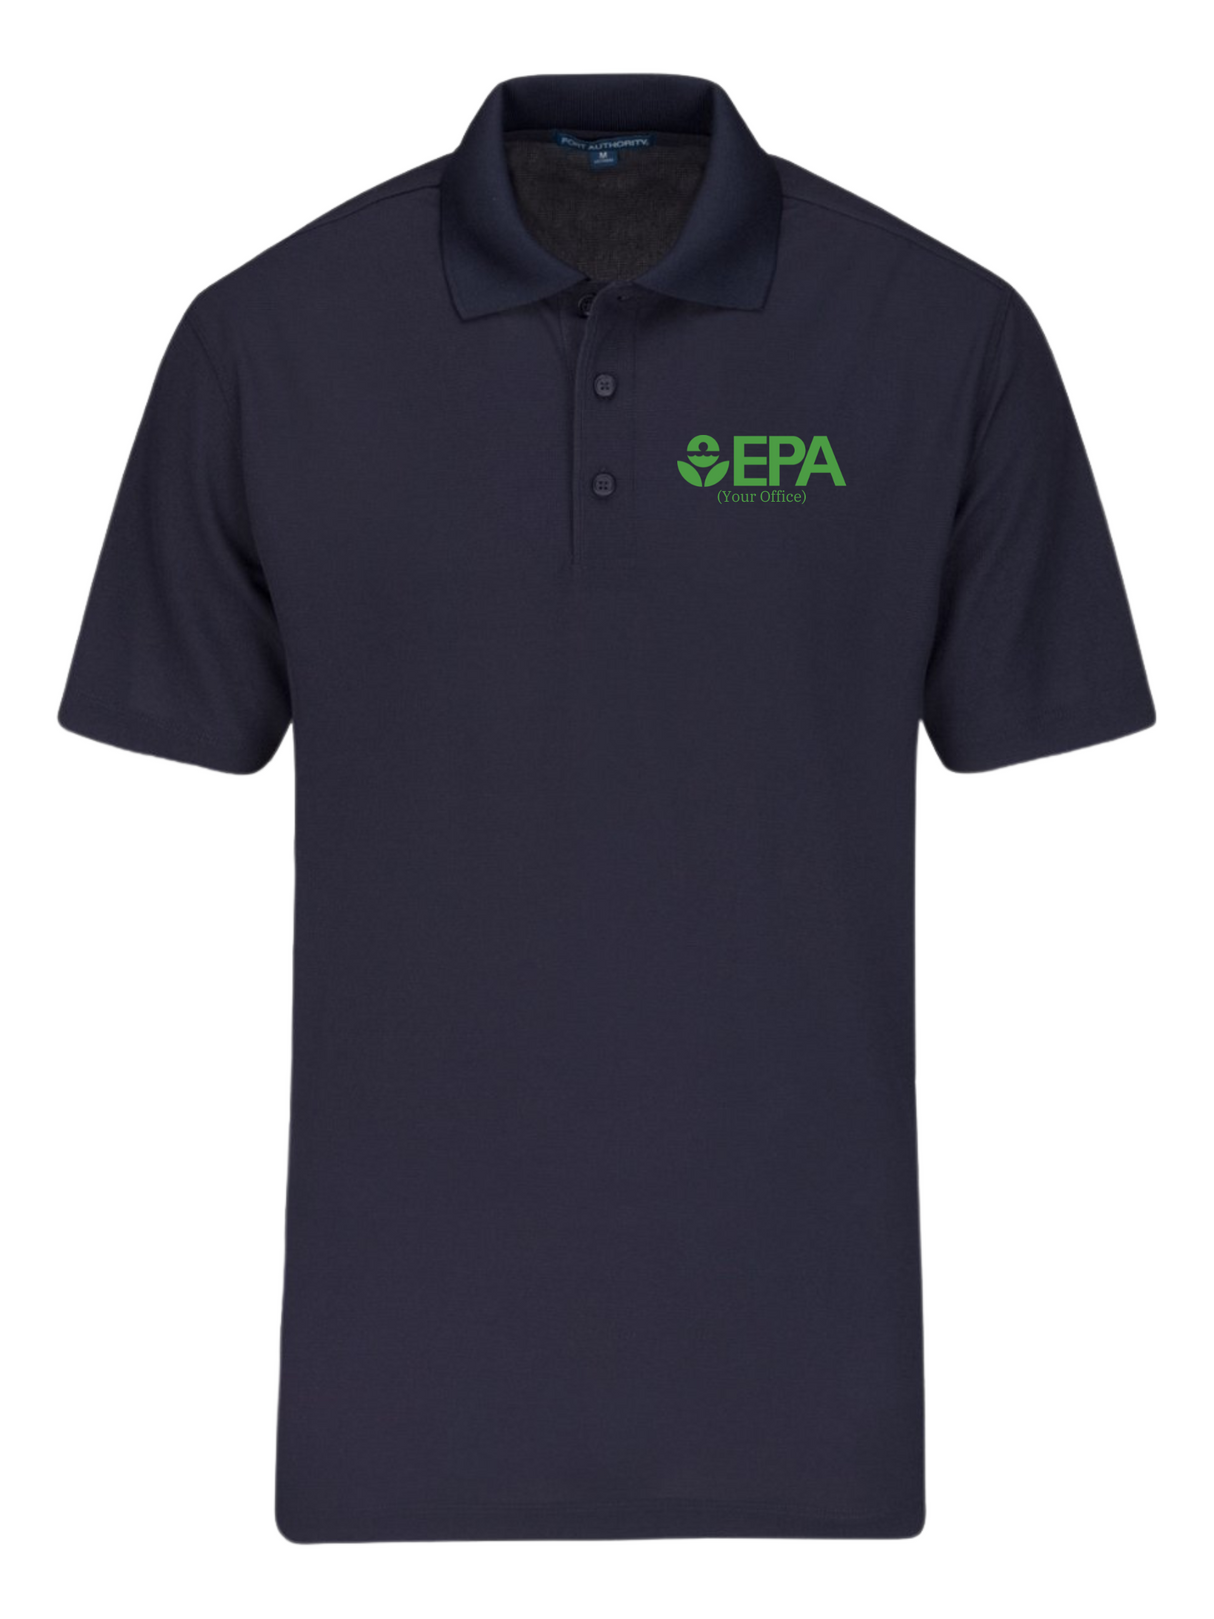 EPA by Office Polo Shirt - Men's Short Sleeve